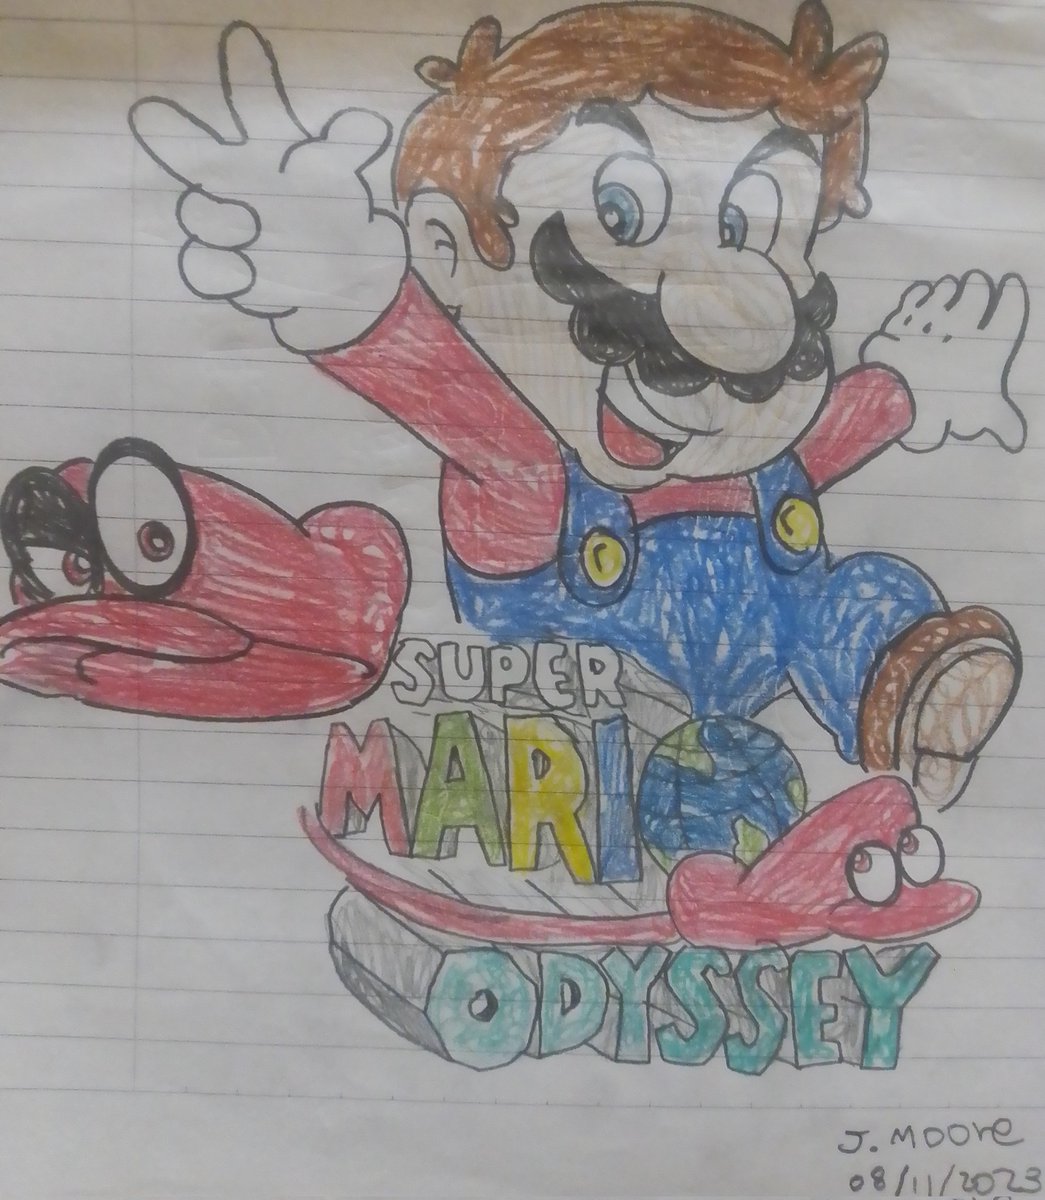 Happy 6th anniversary, Super Mario Odyssey
#supermario #Mario #SuperMarioOdyssey #myartwork #todayingaminghistory #OnThisDay #handrawnartwork #NintendoSwitch #6yearsofsupermarioodyssey #supermarioodyssey6thanniversary #6yrssupermarioodyssey #6thanniversary #Nintendo #mariofanart